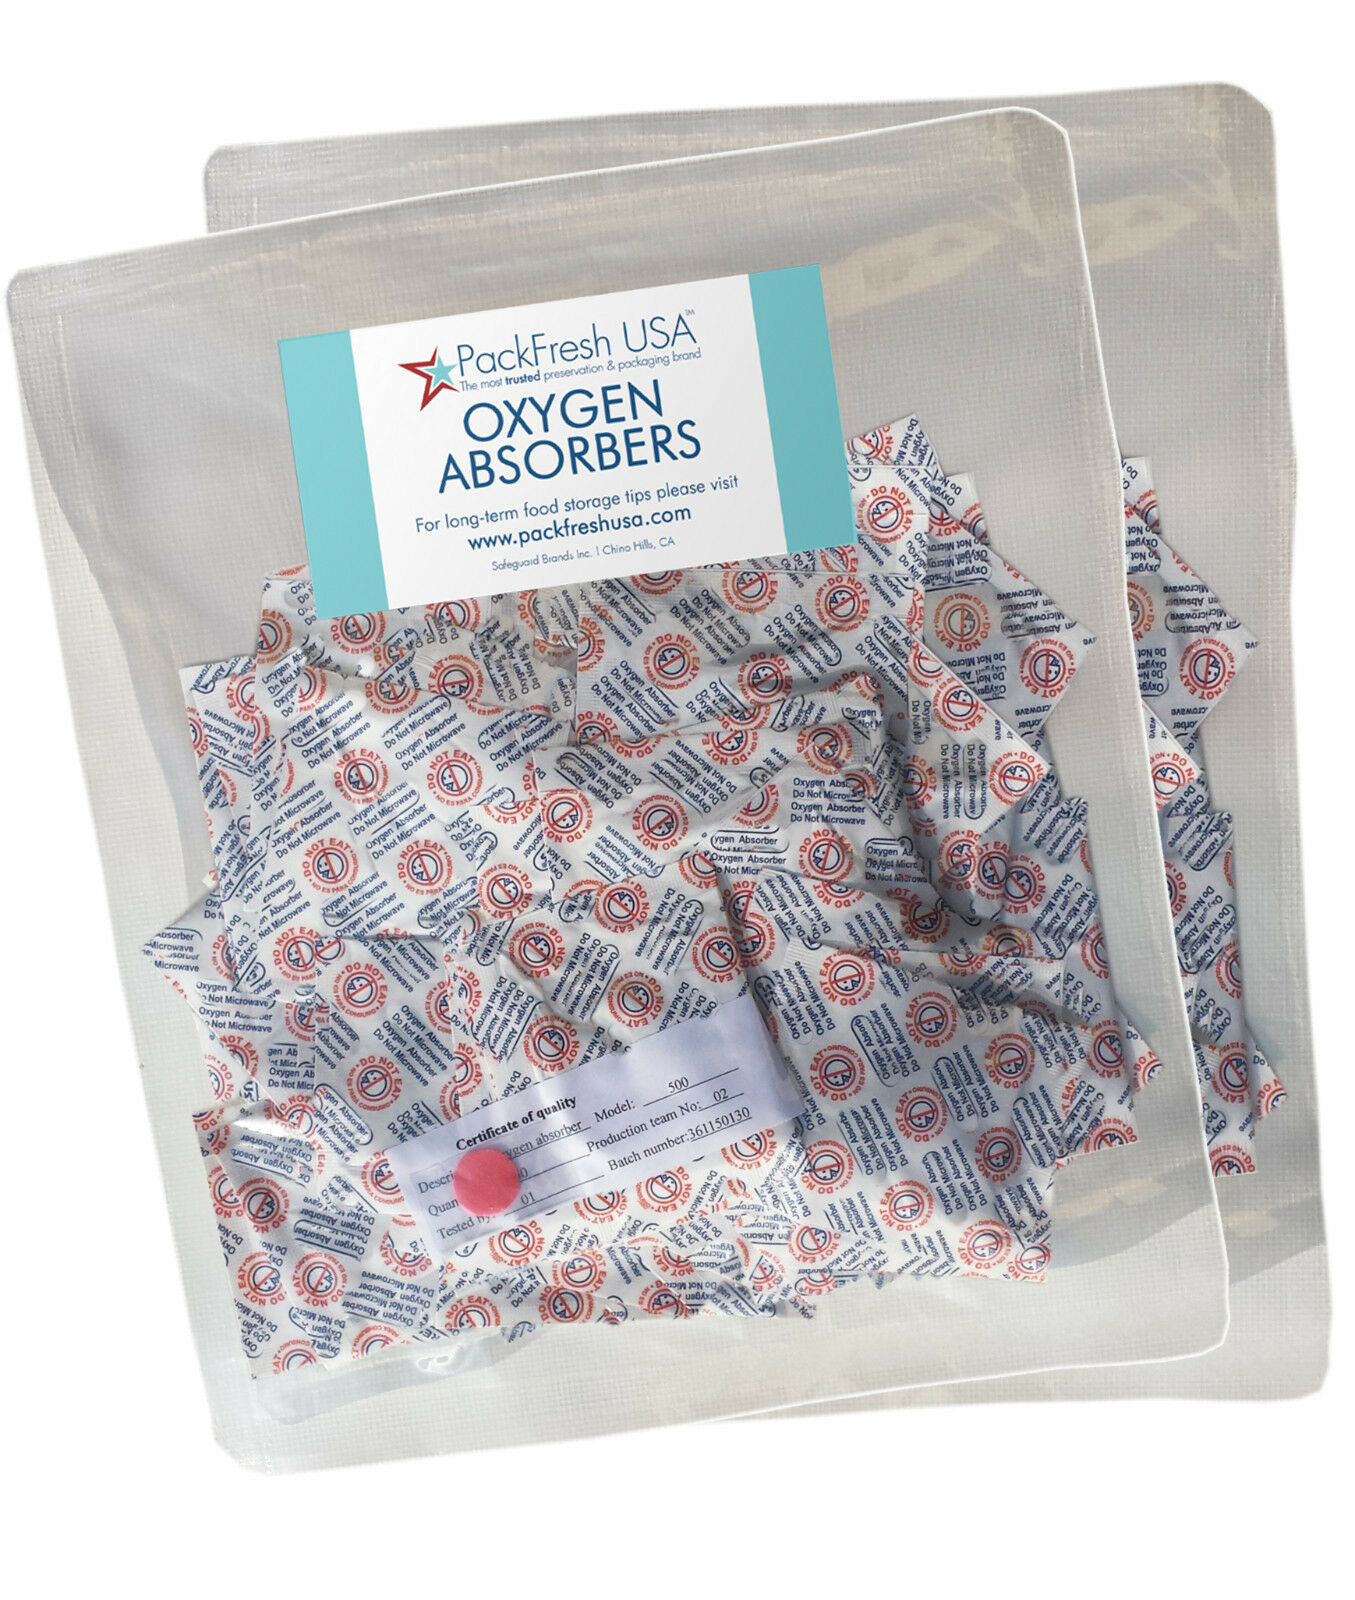 Packfreshusa 500cc Oxygen Absorber Packs Food-grade Non-toxic - 100 Pack